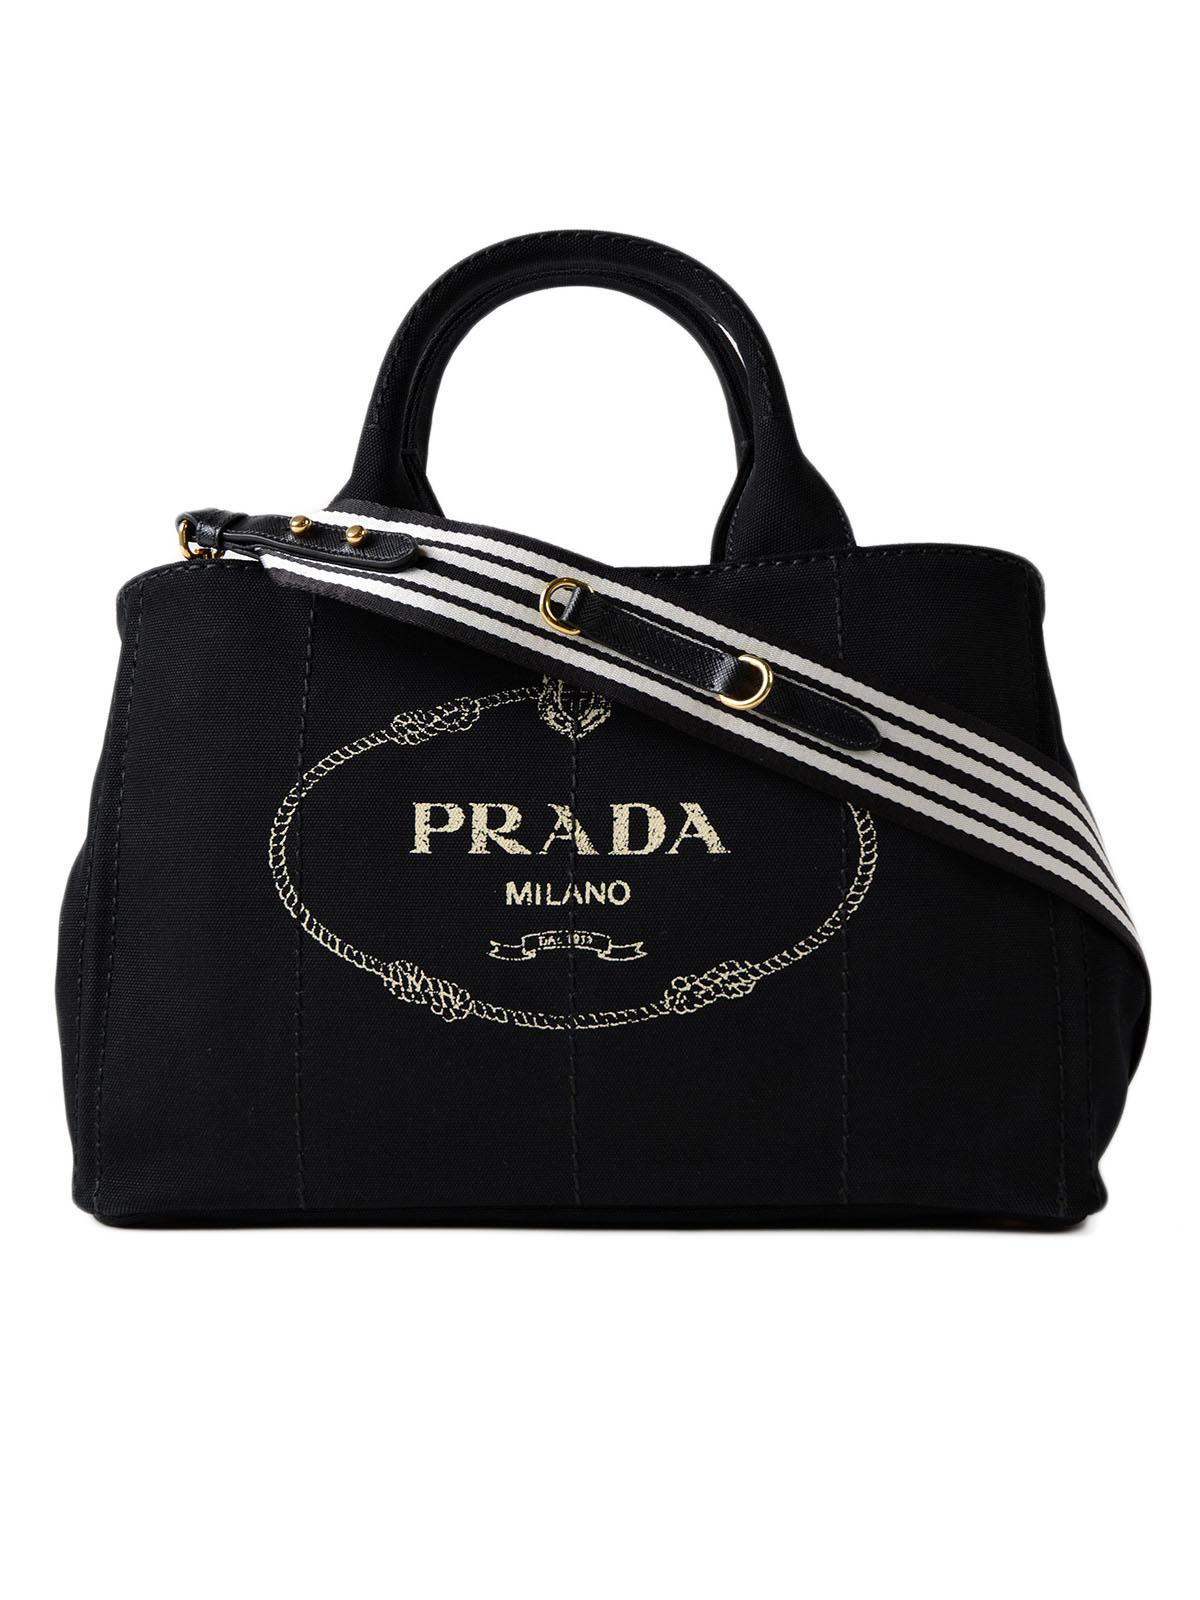 Lyst - Prada Handbag Shopping Bag Purse in Black